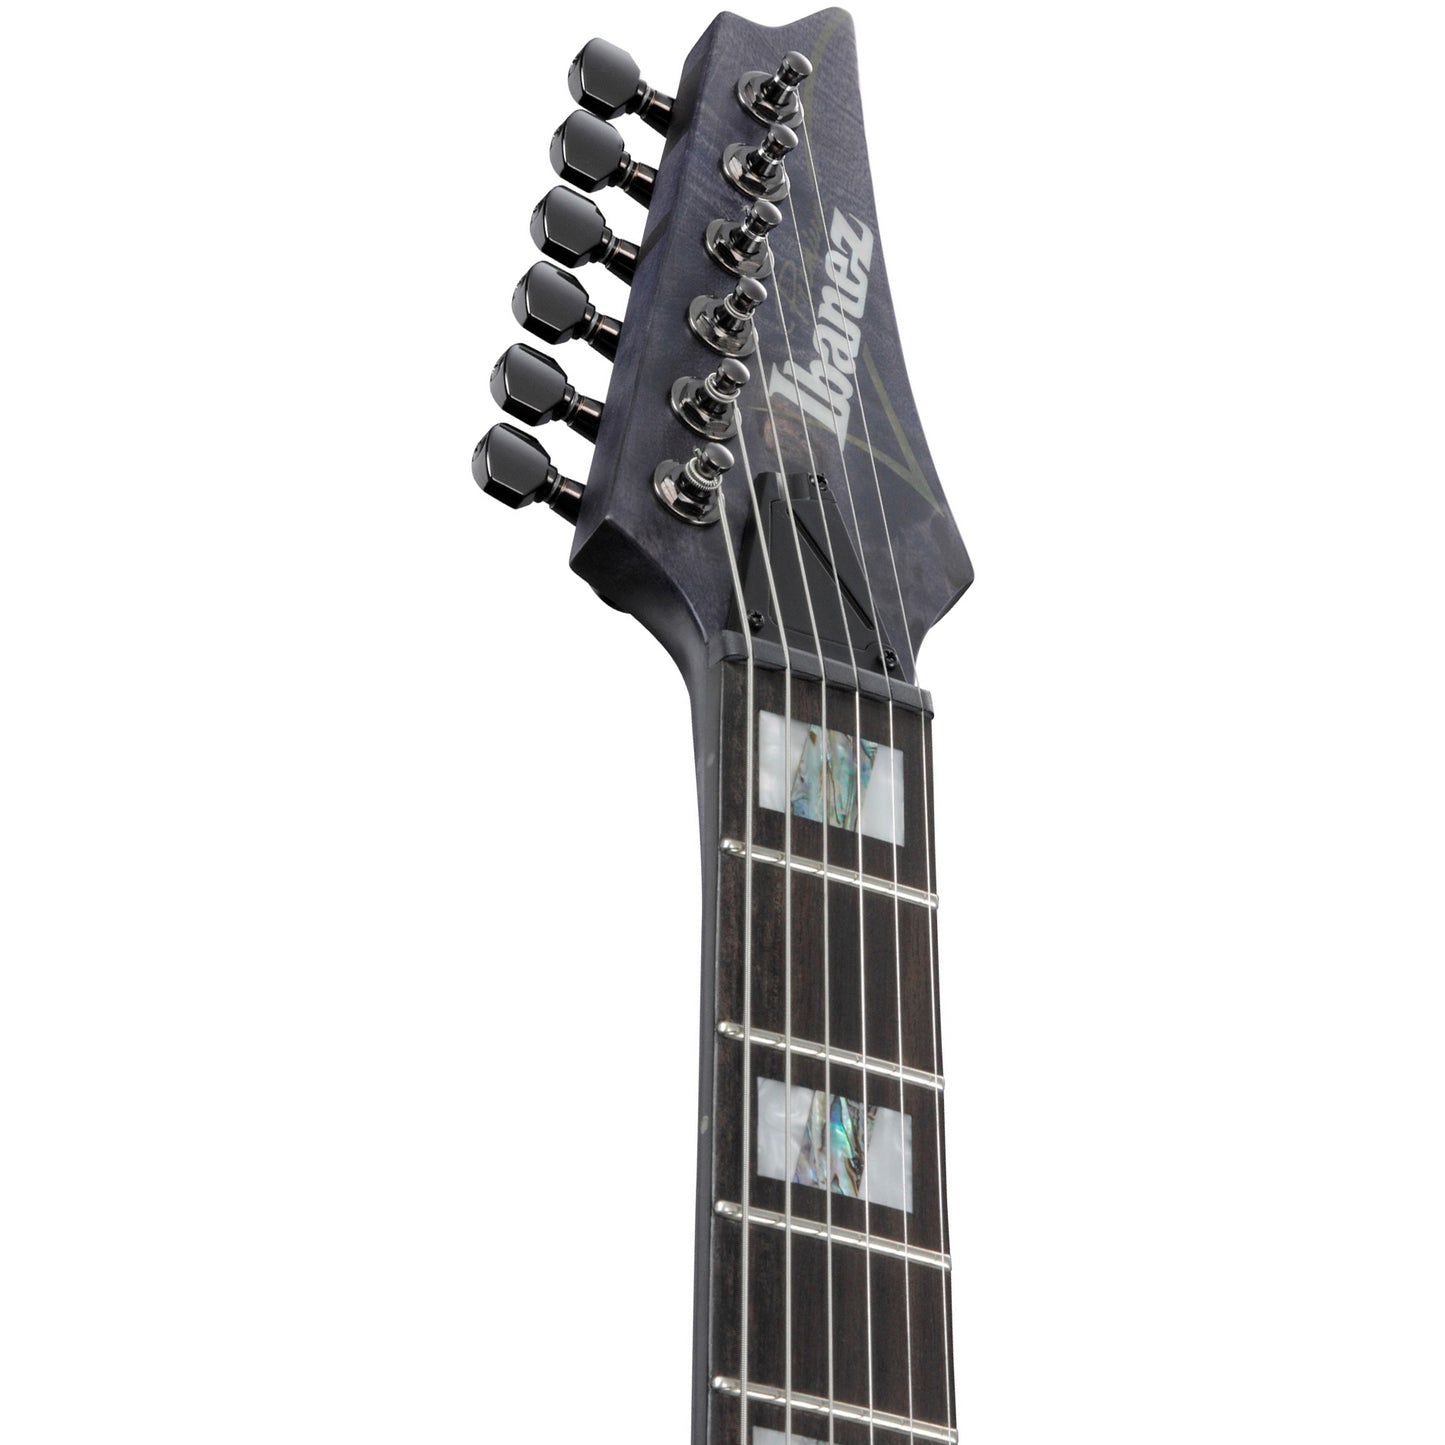 Ibanez RGT1221PBDTF RG Premium 6-String Electric Guitar - Deep Twilight Flat